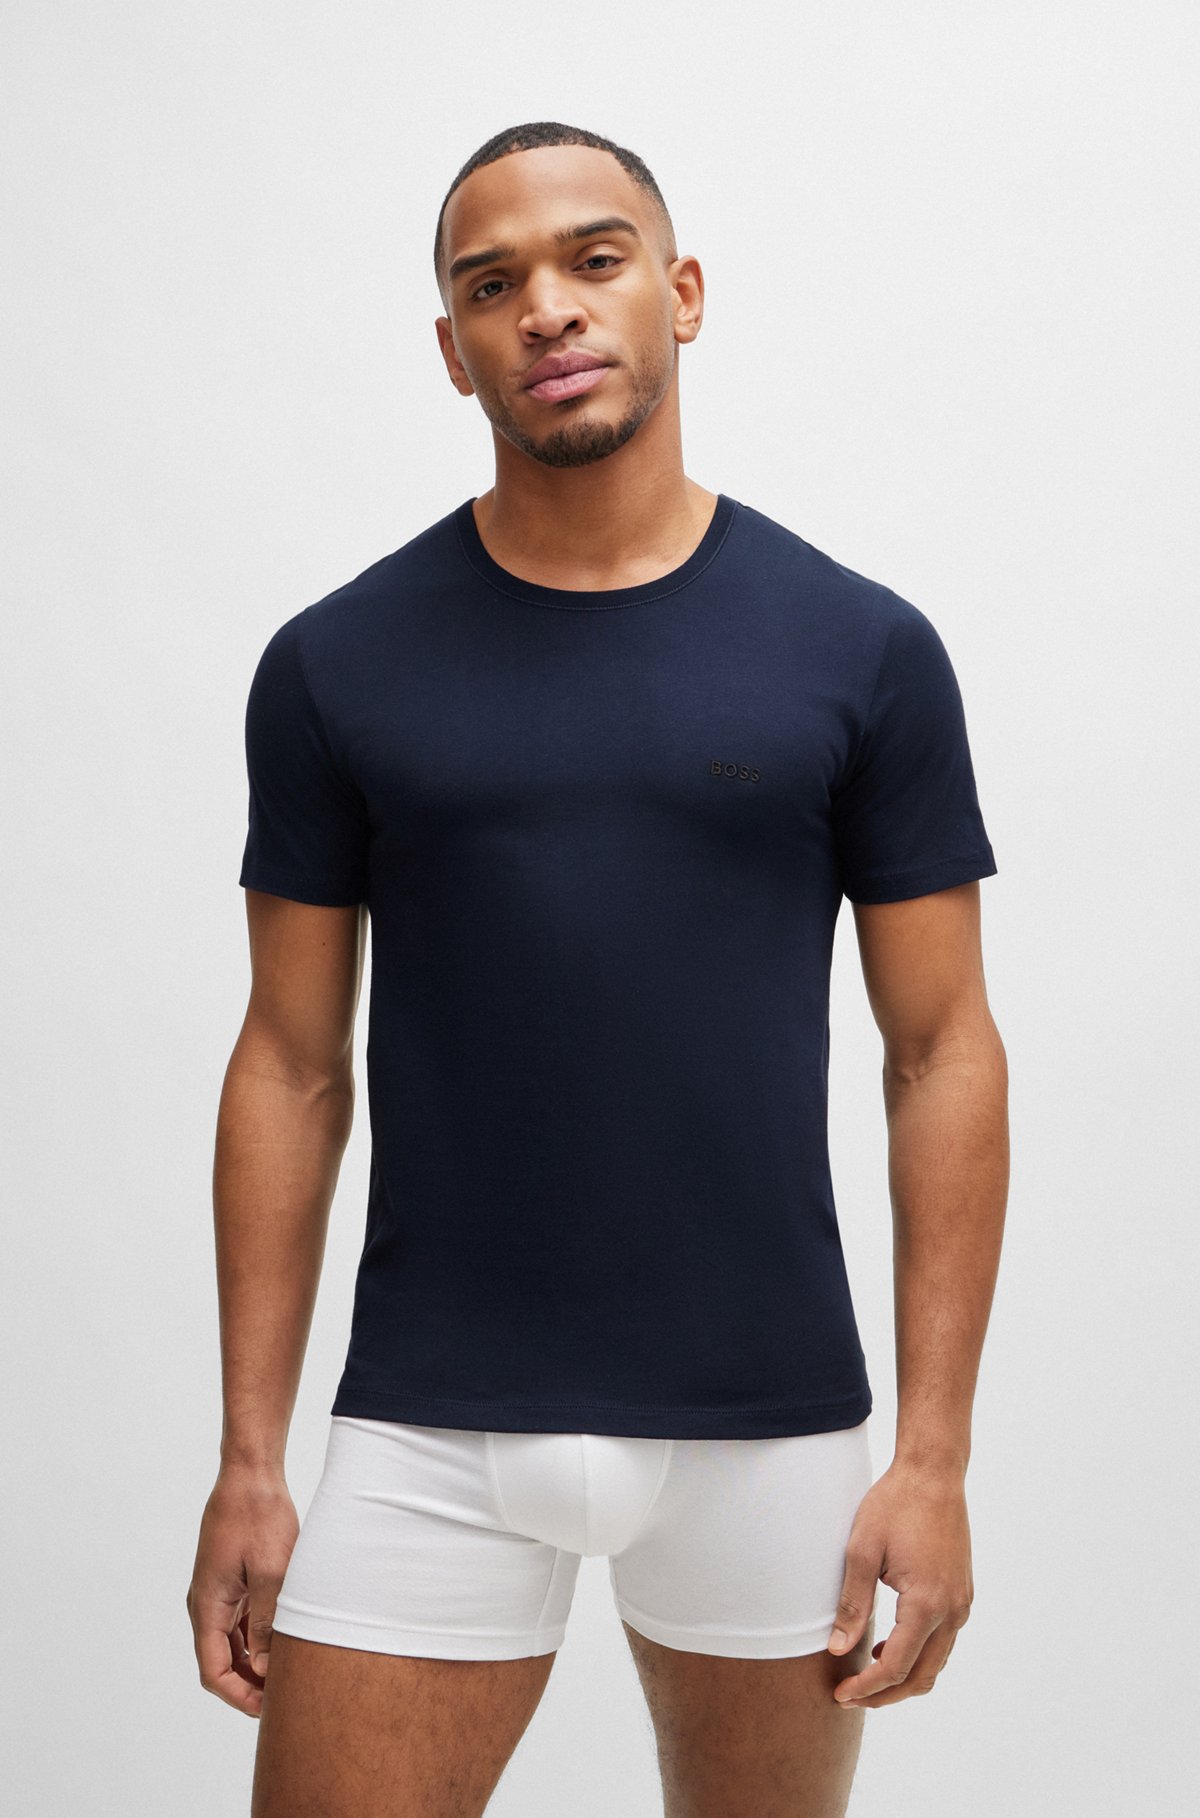 BOSS - Three-pack of logo underwear T-shirts in cotton jersey